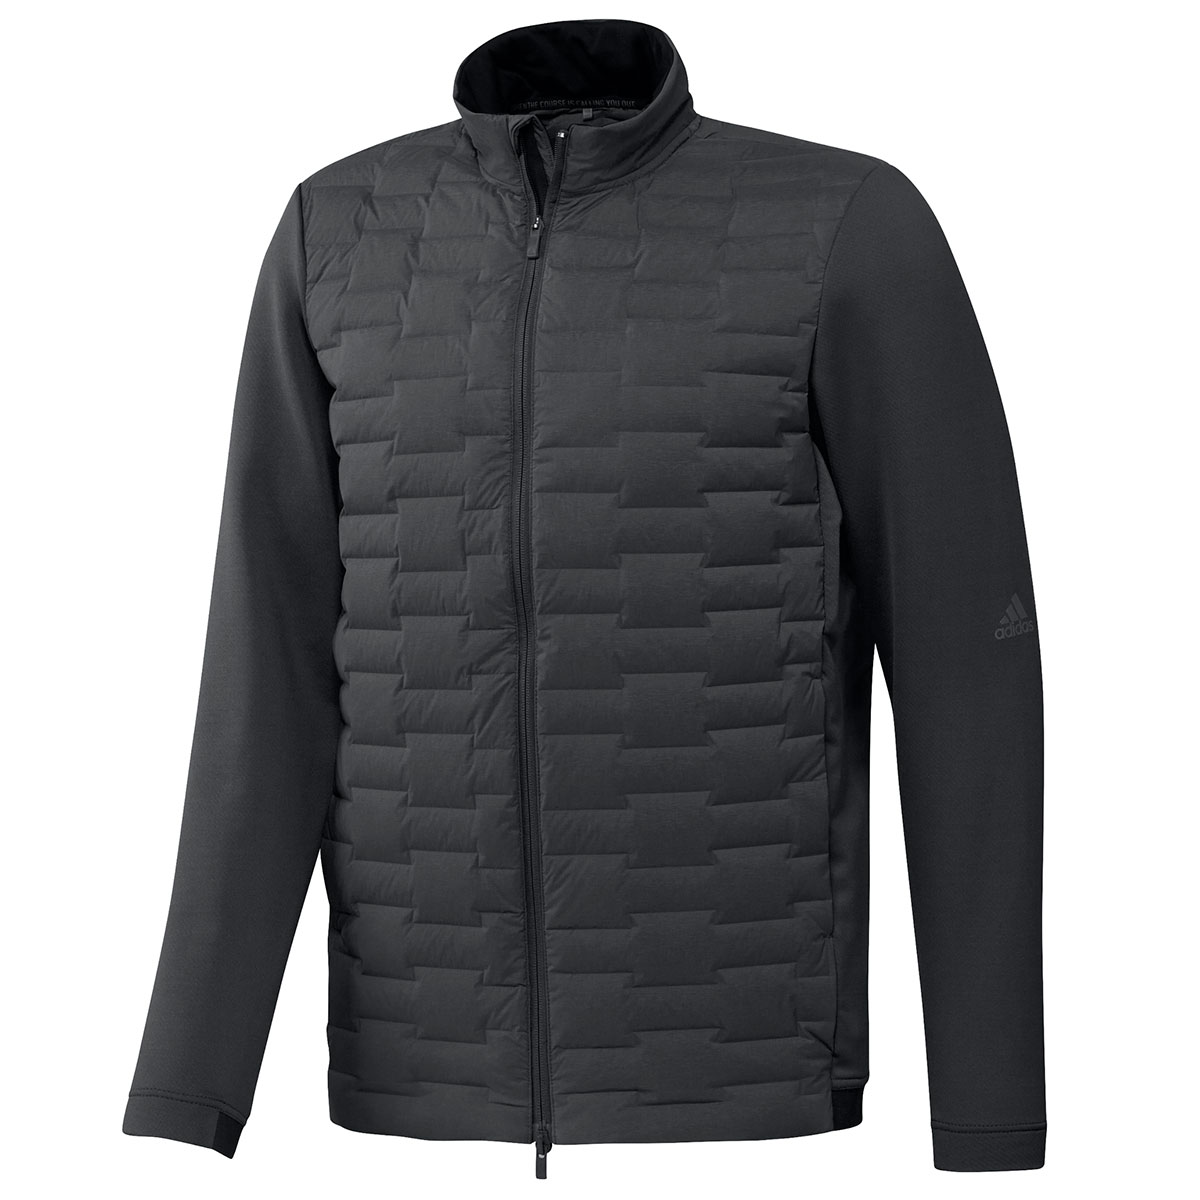 Adidas Frostguard Jacket Black